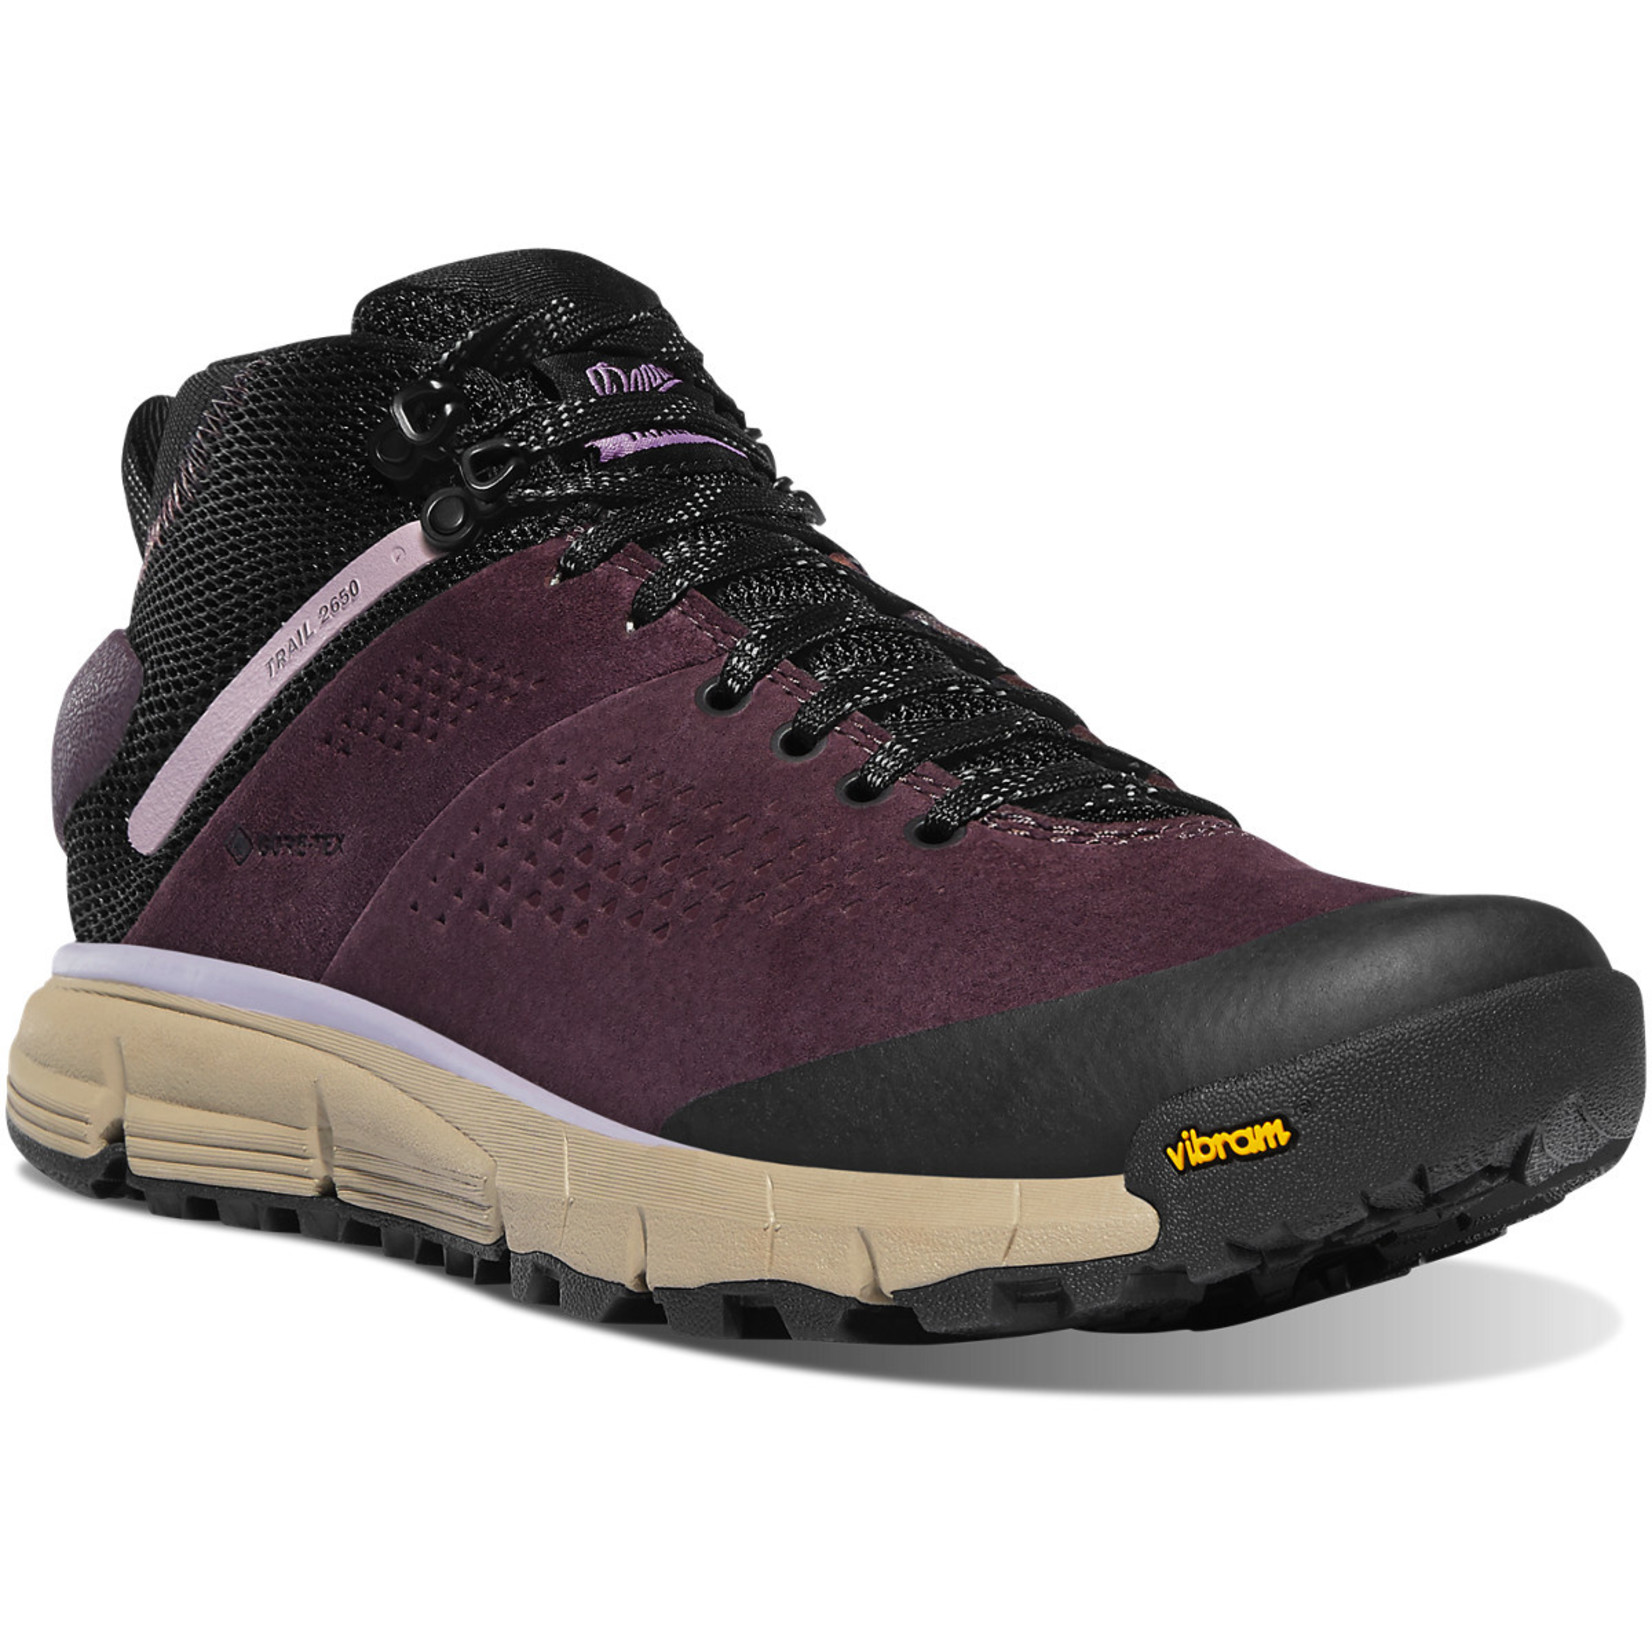 Danner Danner Trail 2650 Mid GTX Women’s Hiking Boots